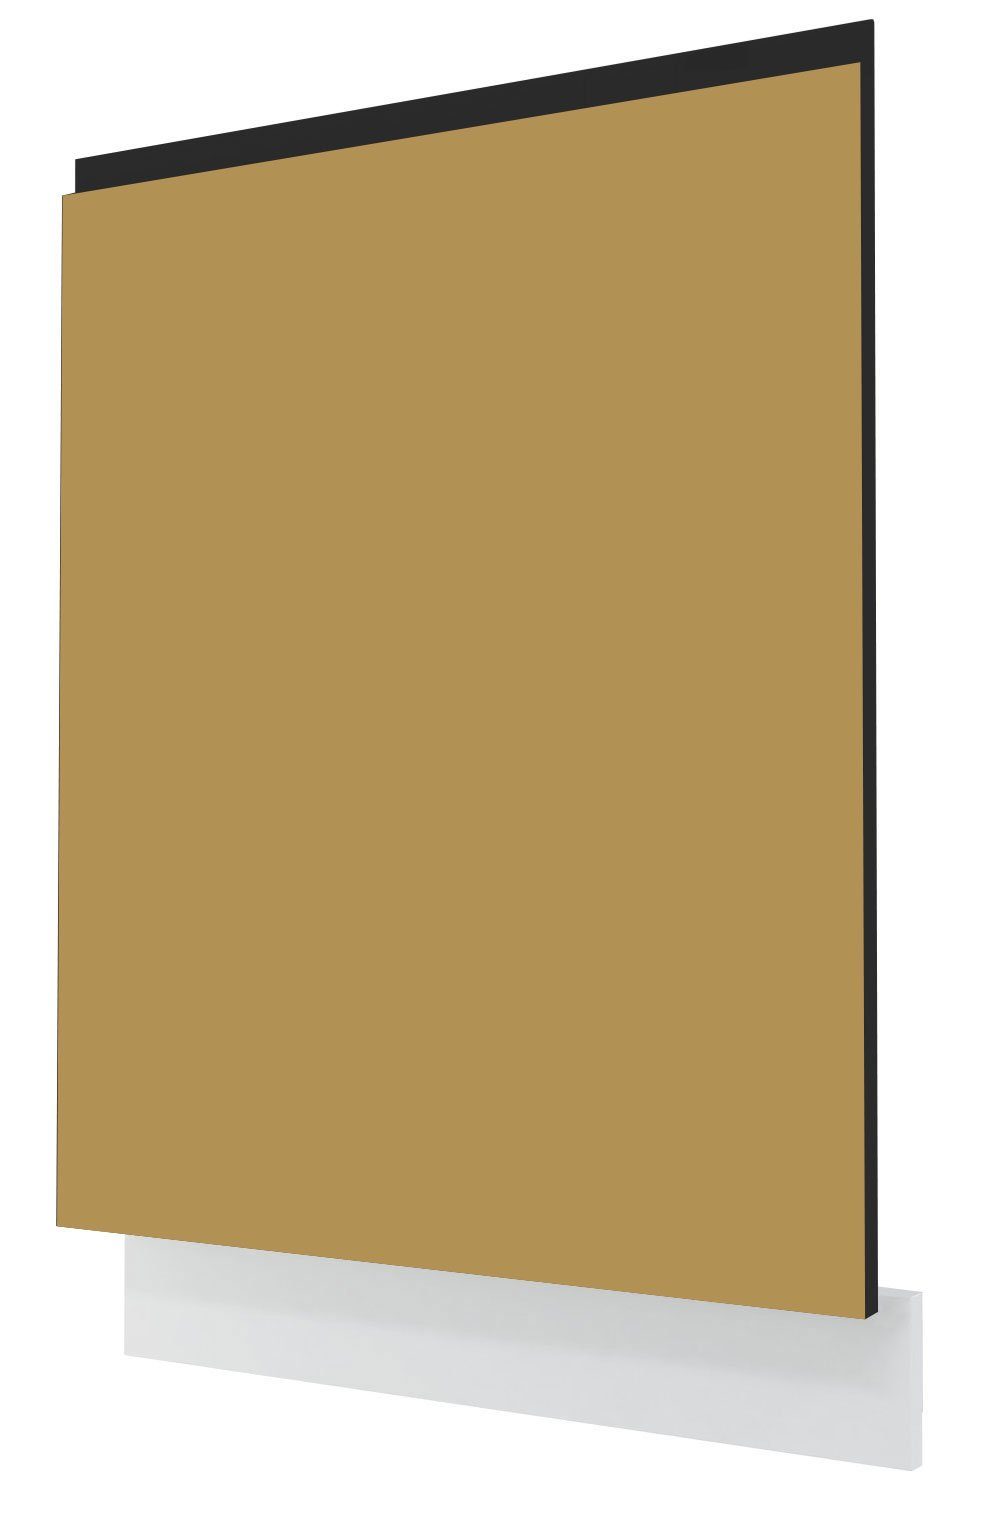 Sockelfarbe gold grifflos 60cm matt Velden, Sockelblende wählbar und vollintegriert Feldmann-Wohnen super Front-